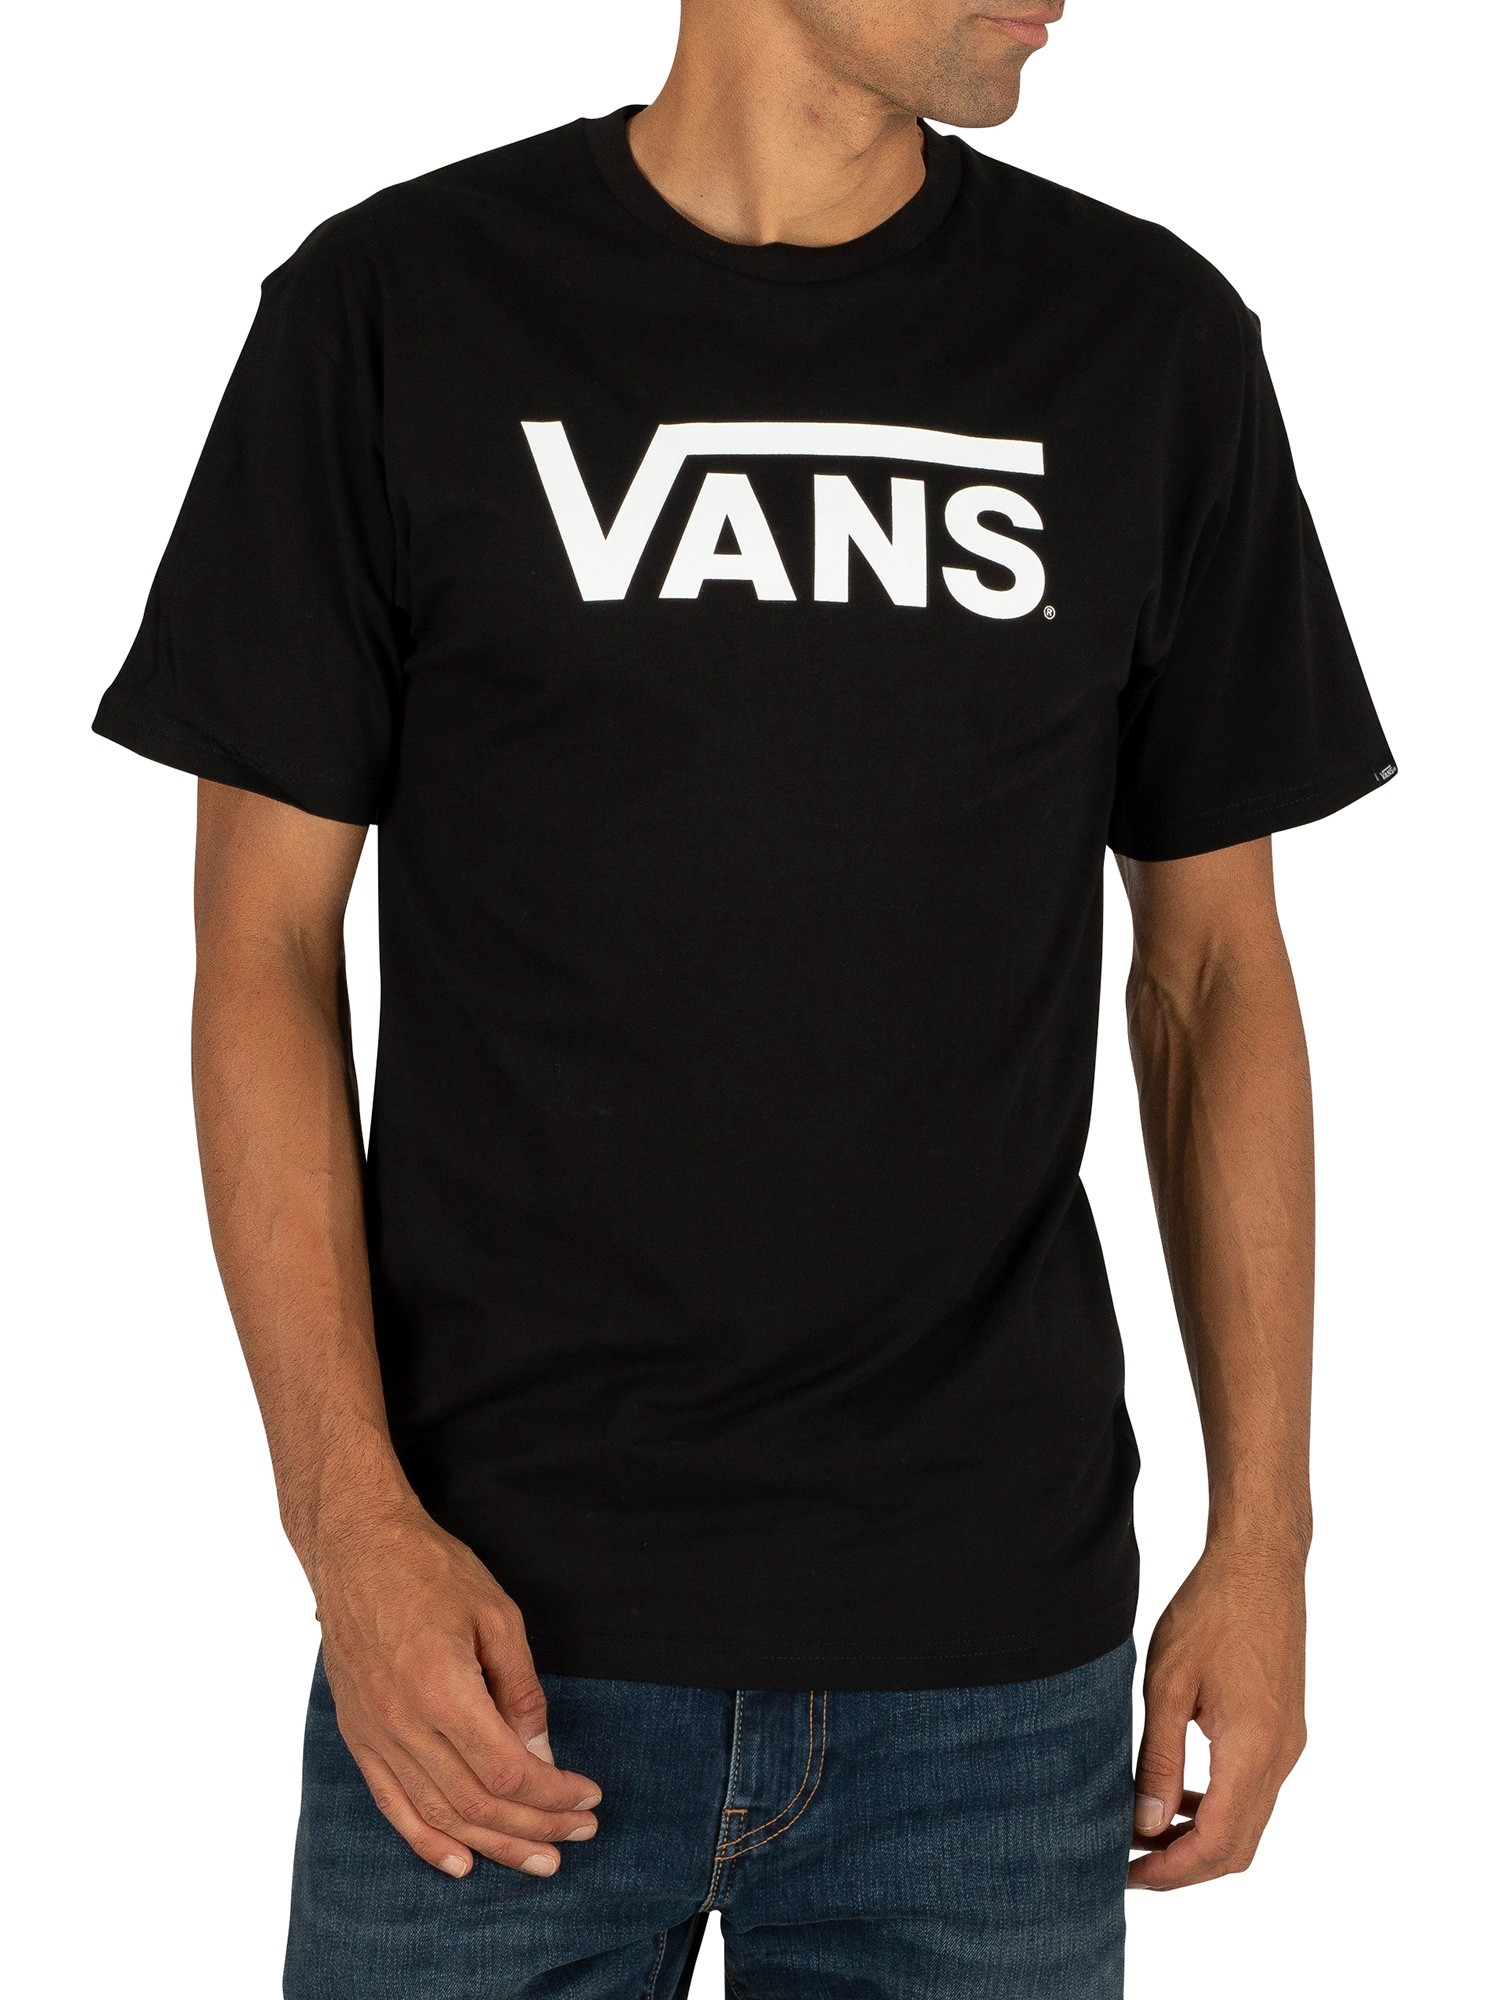 vans black and white t shirt